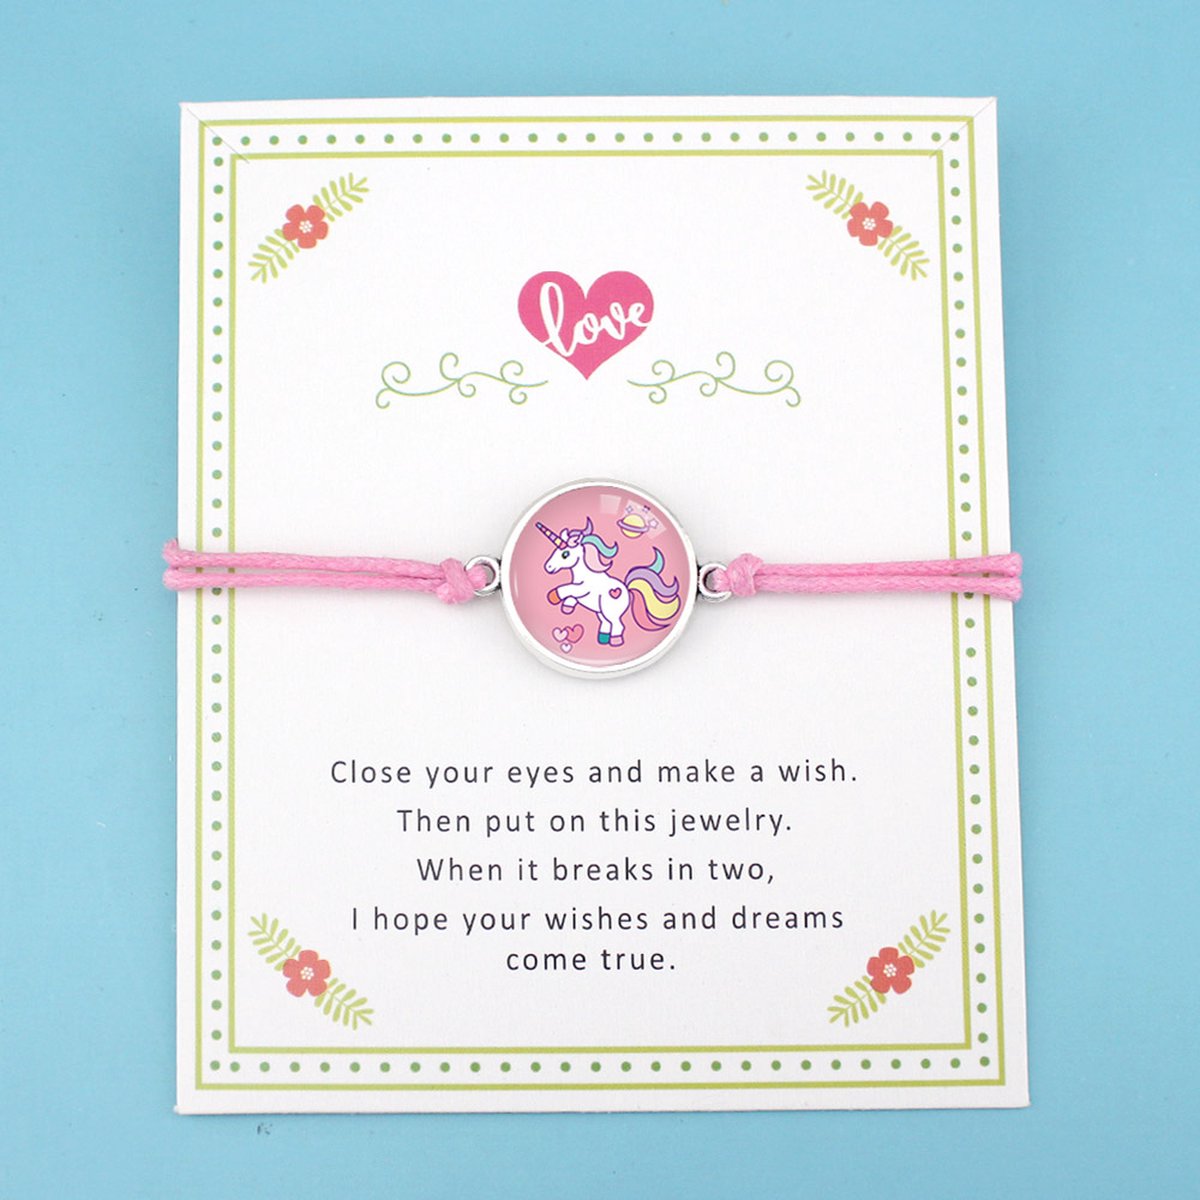 Manks Kids Collections ® Roze Armband, Love armband - vriendinnen armband - cadeau voor een vriendin - Zilverig armband met een Roze Eenhoorn - Armband 30 cm